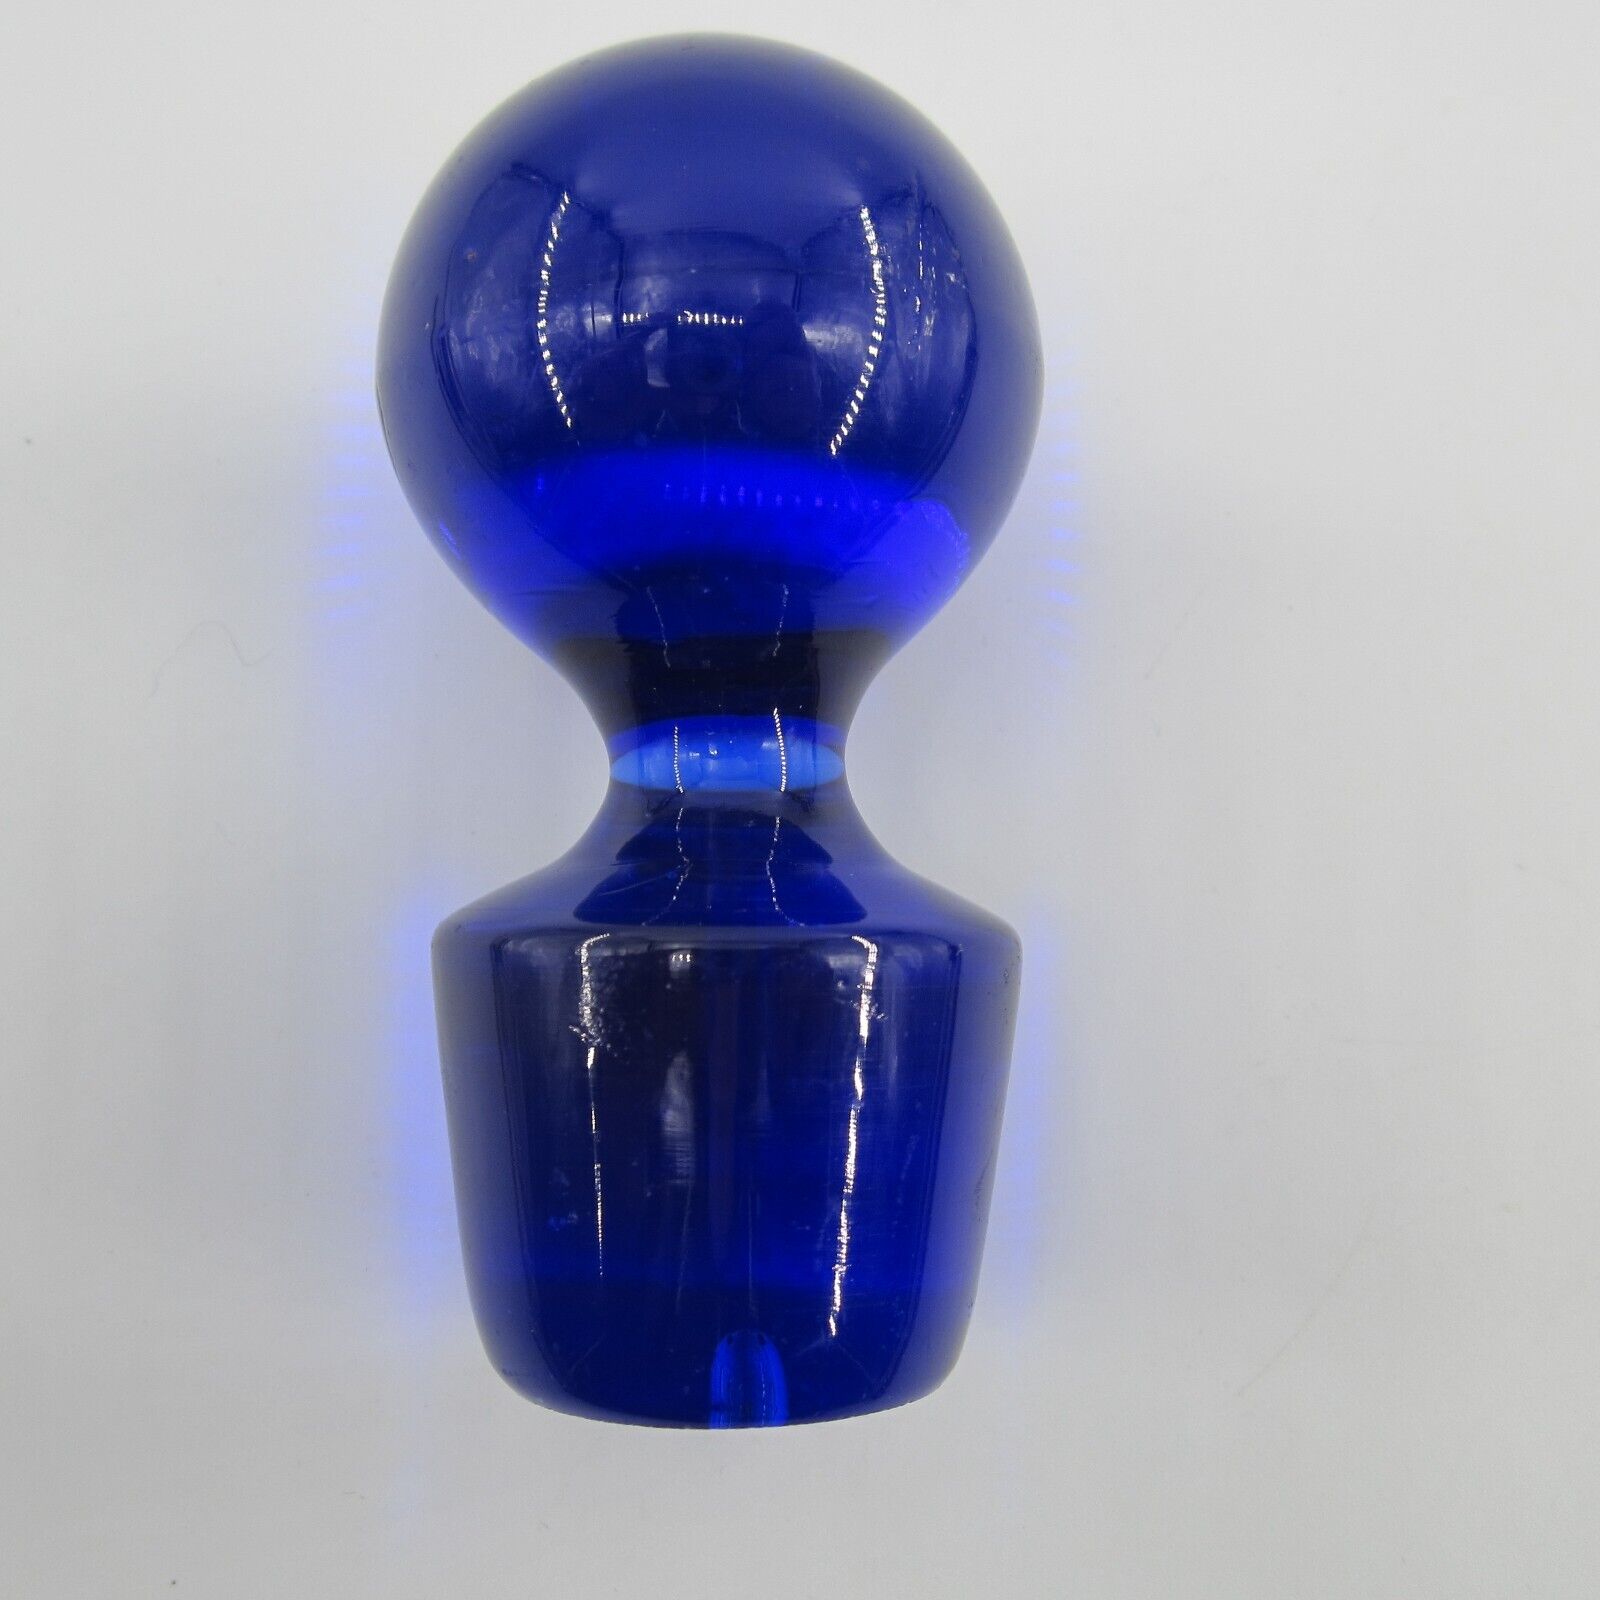 Rare Vintage Large Solid Round Cobalt Blue Glass Bottle Decanter Stopper 4” Tall